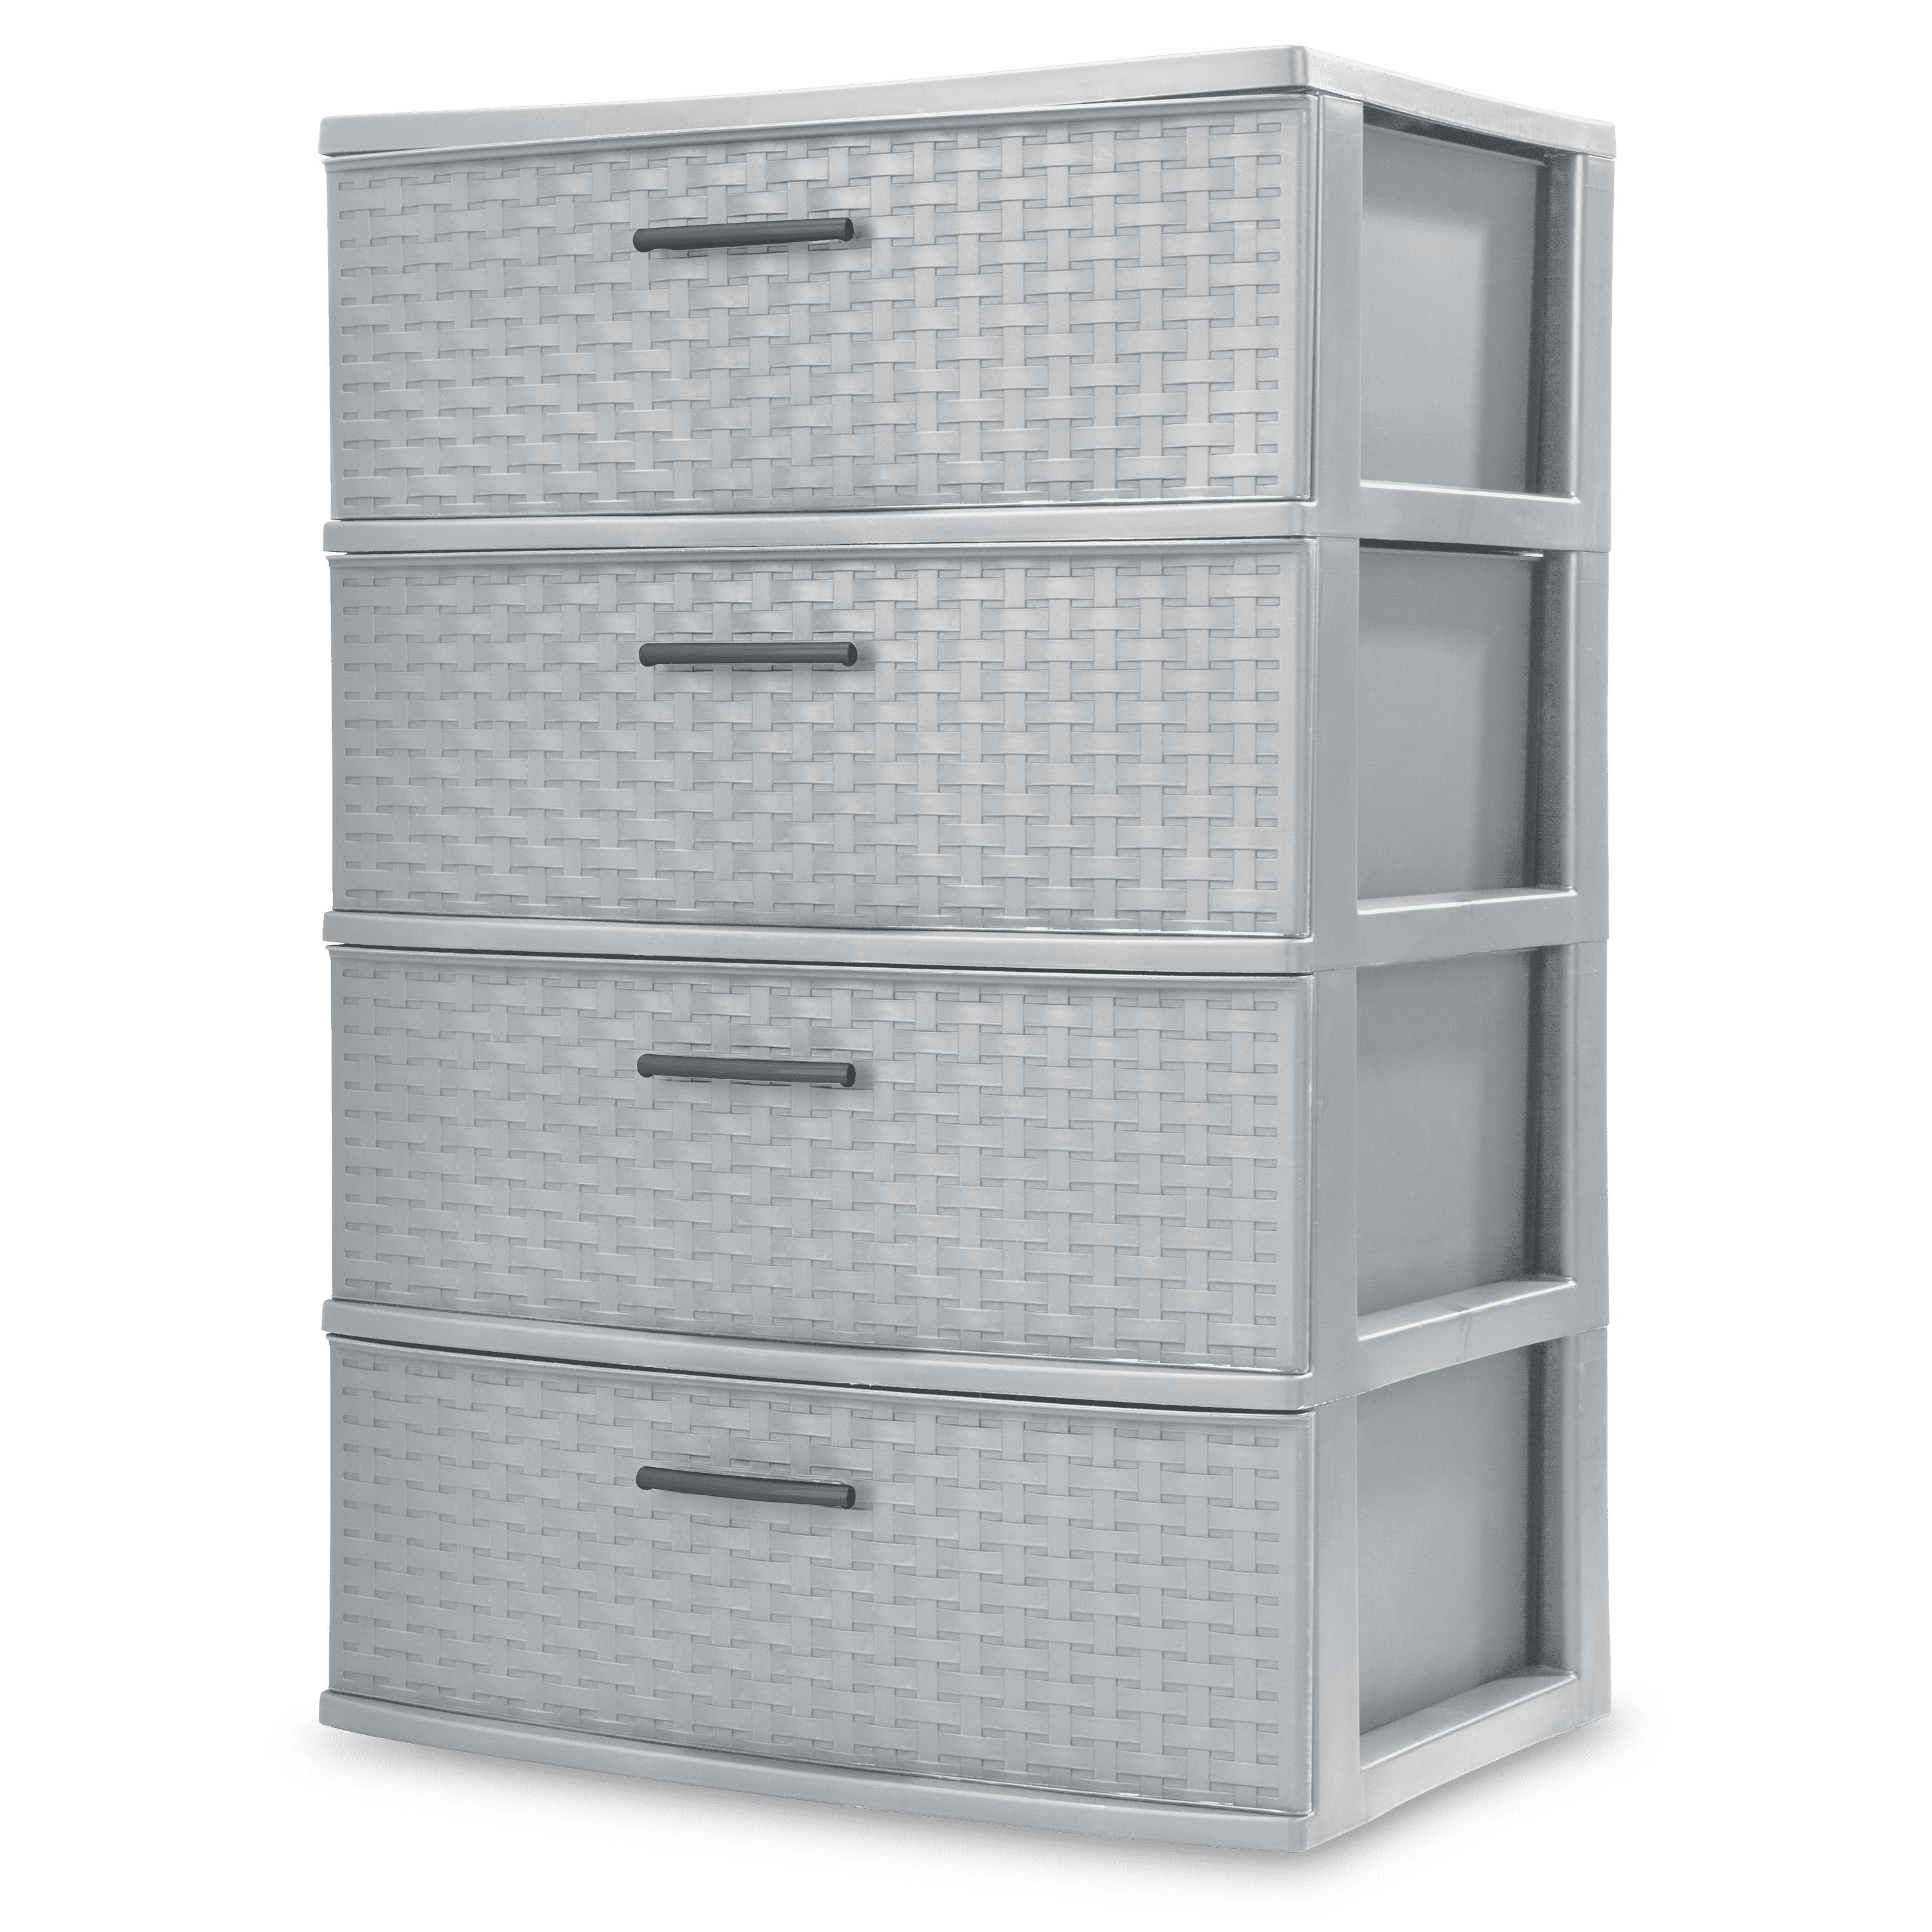 Storage Tower 4 Drawer Plastic Cabinet Clothes Organizer Box Espresso Bedroom